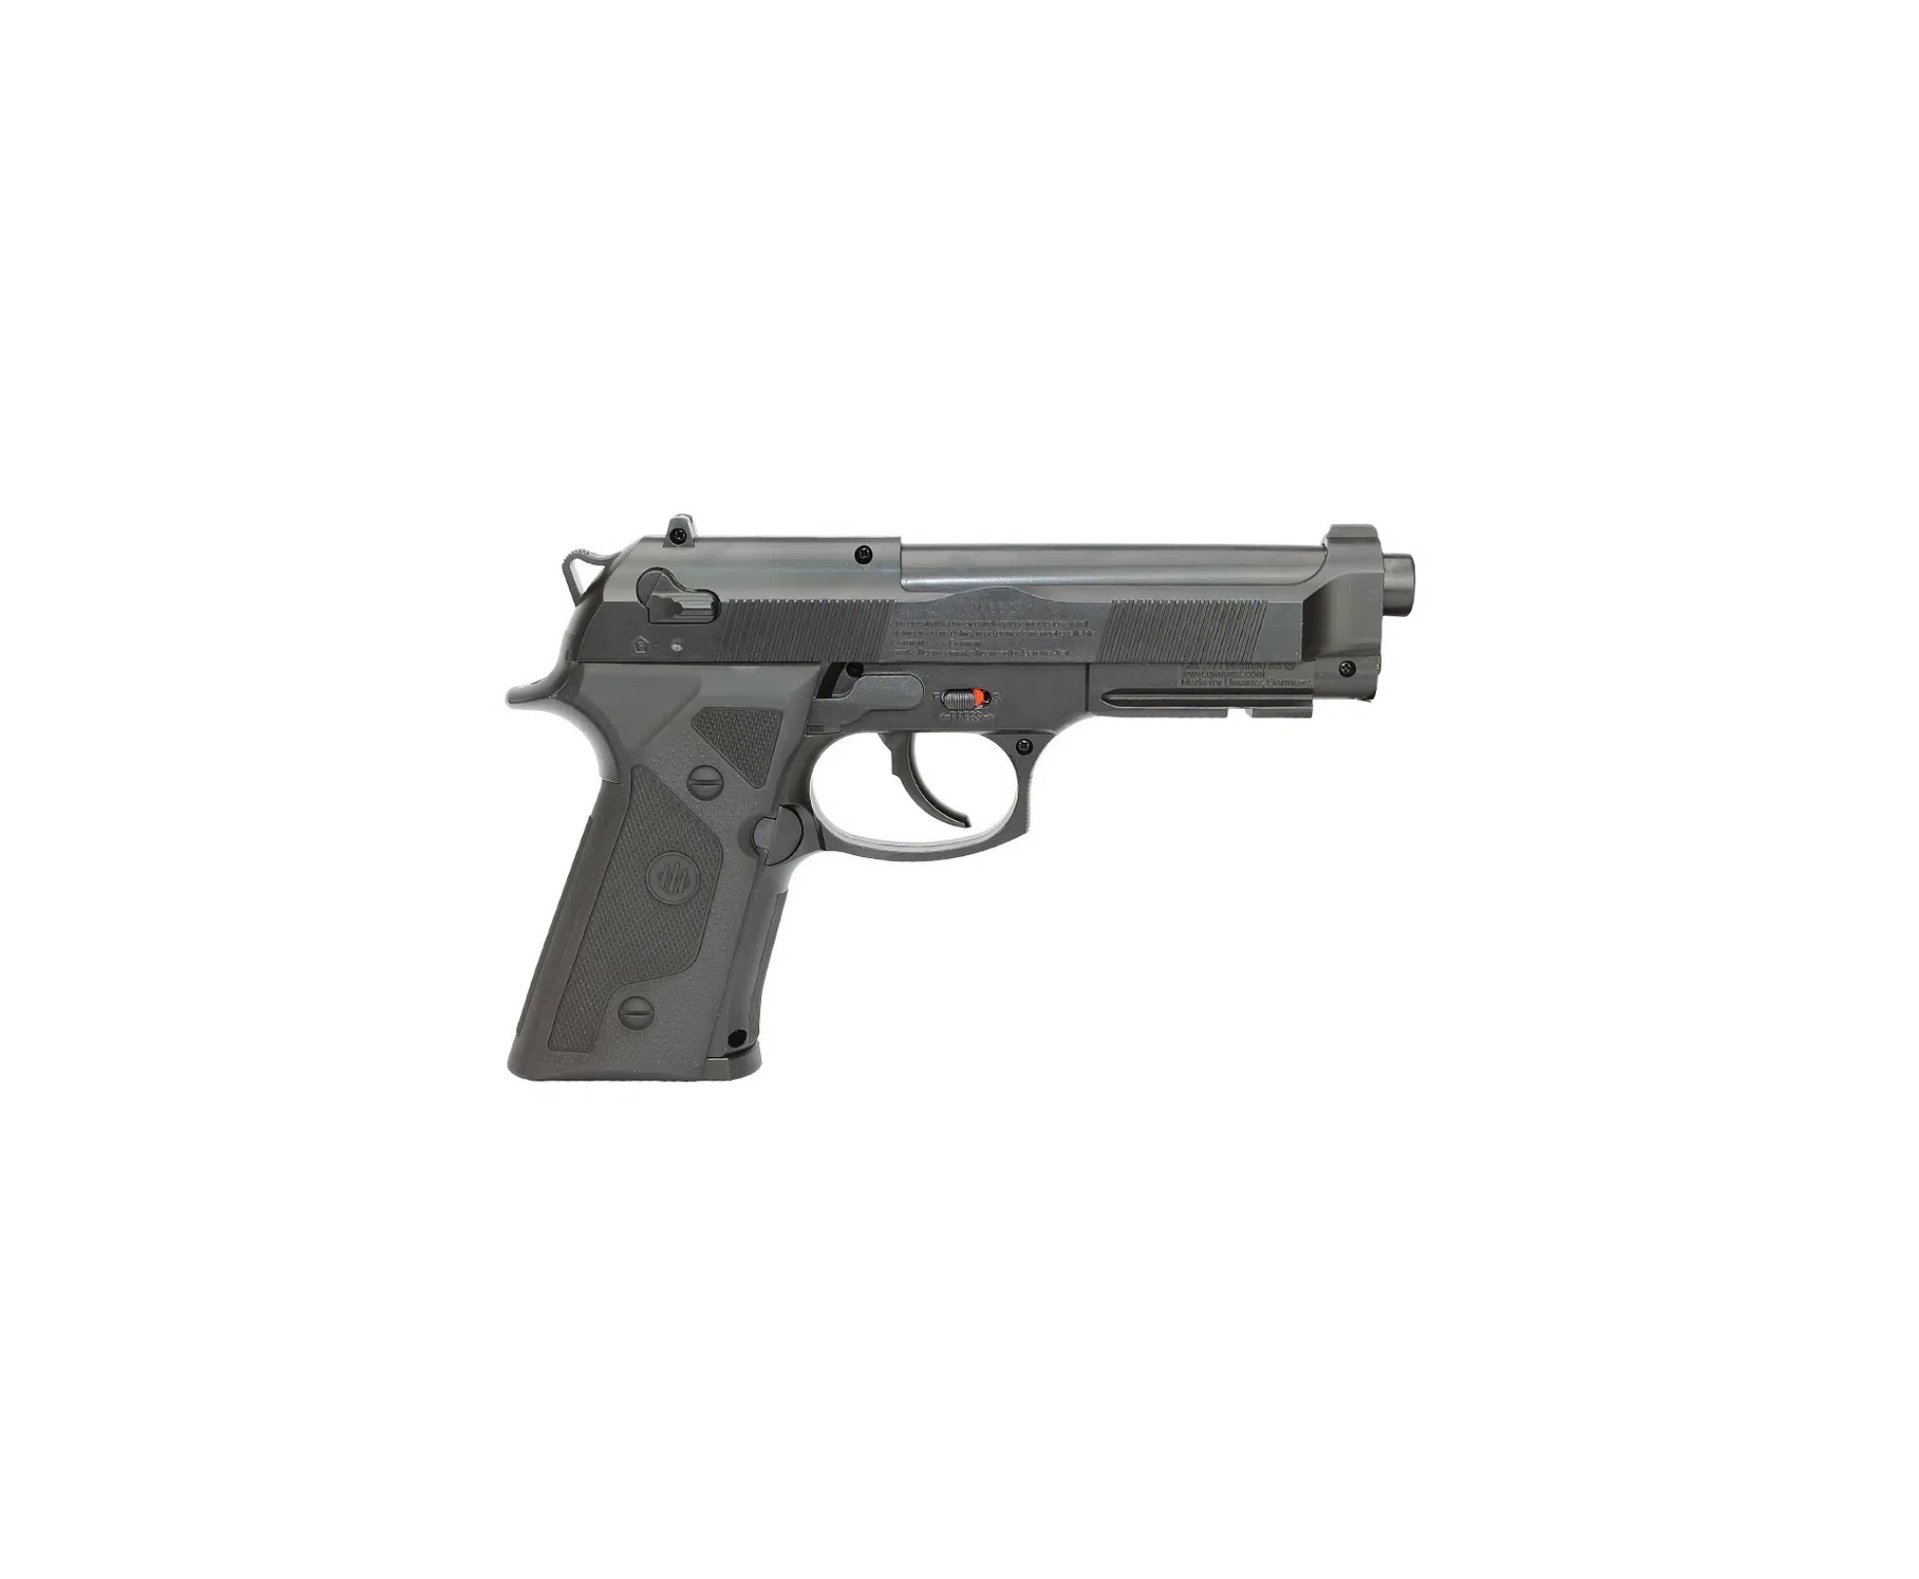 Pistola Pressão Co2 Beretta 92 Elite Ii Umarex 4,5mm + Co2 + BBs + Oleo de silicone + Case